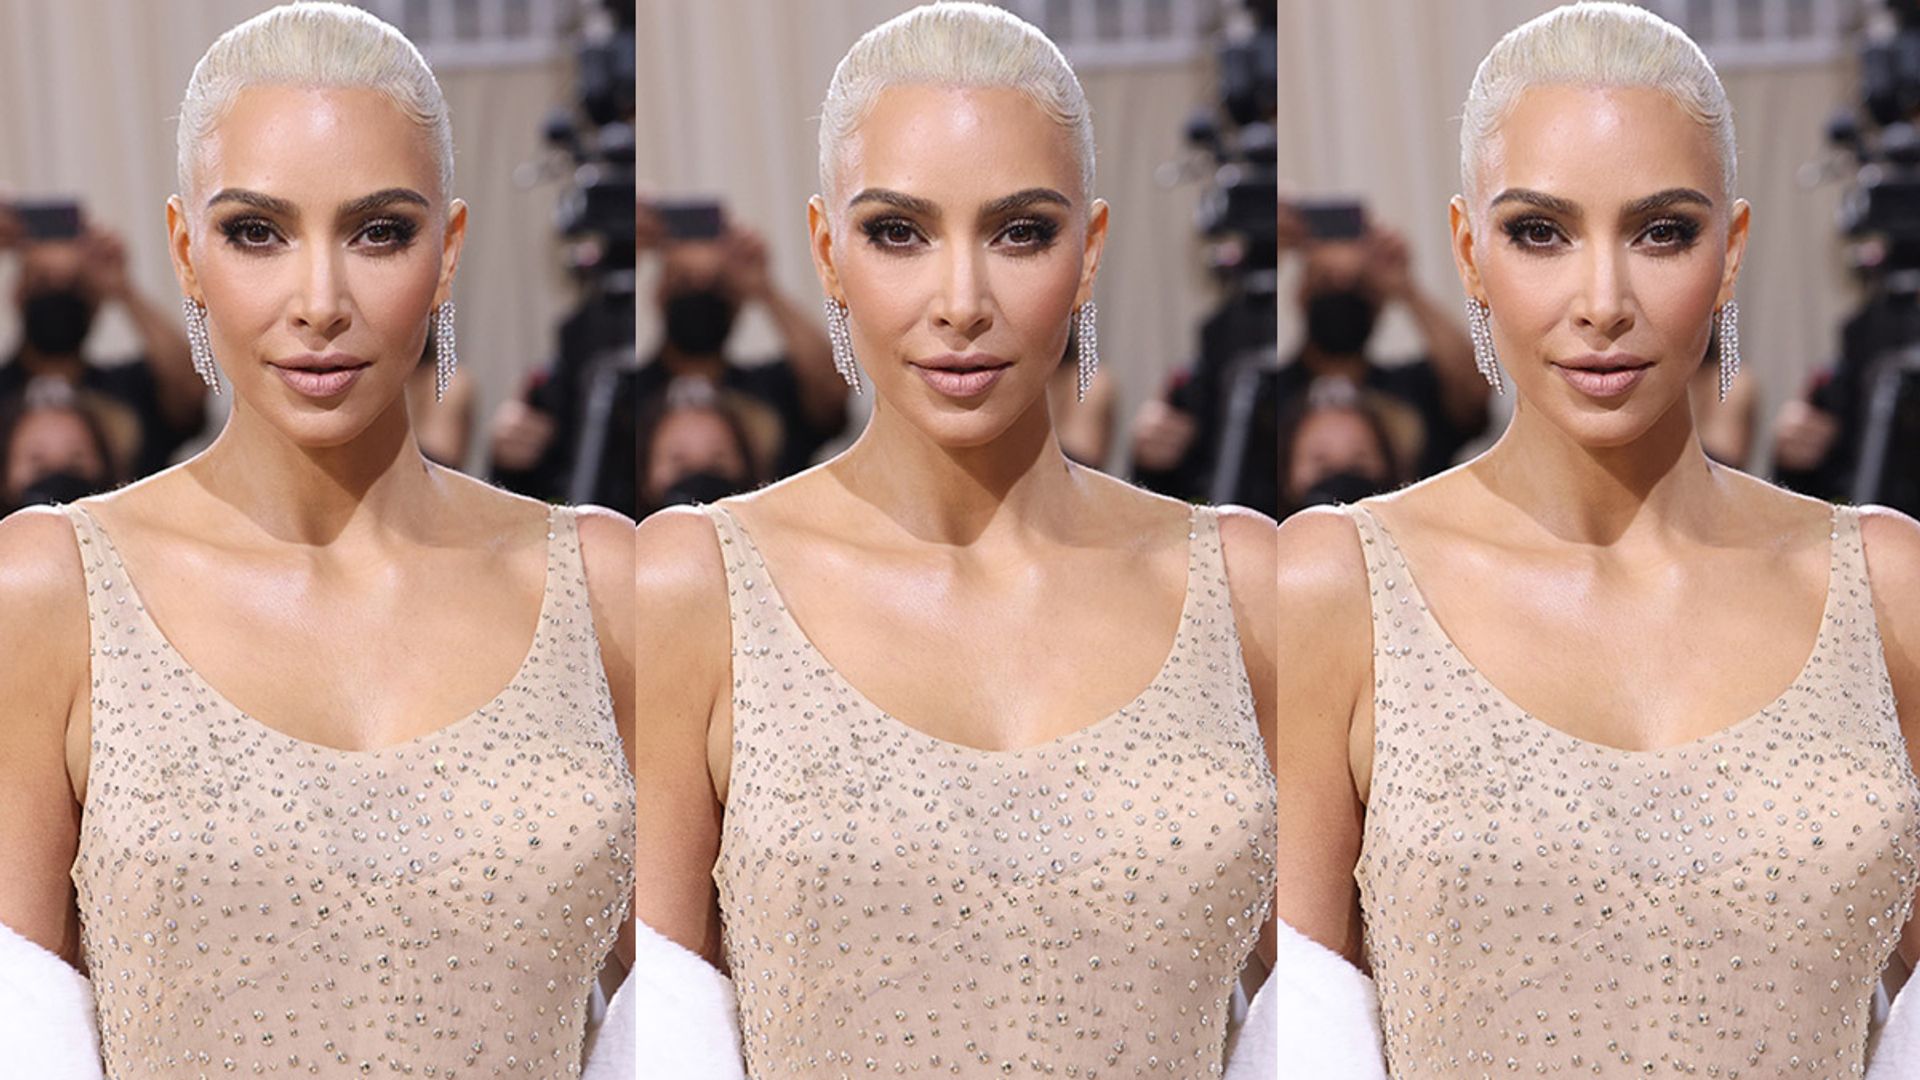 How Kim Kardashian's makeup artist perfected her Marilyn Monroe dewy skin for the Met Gala